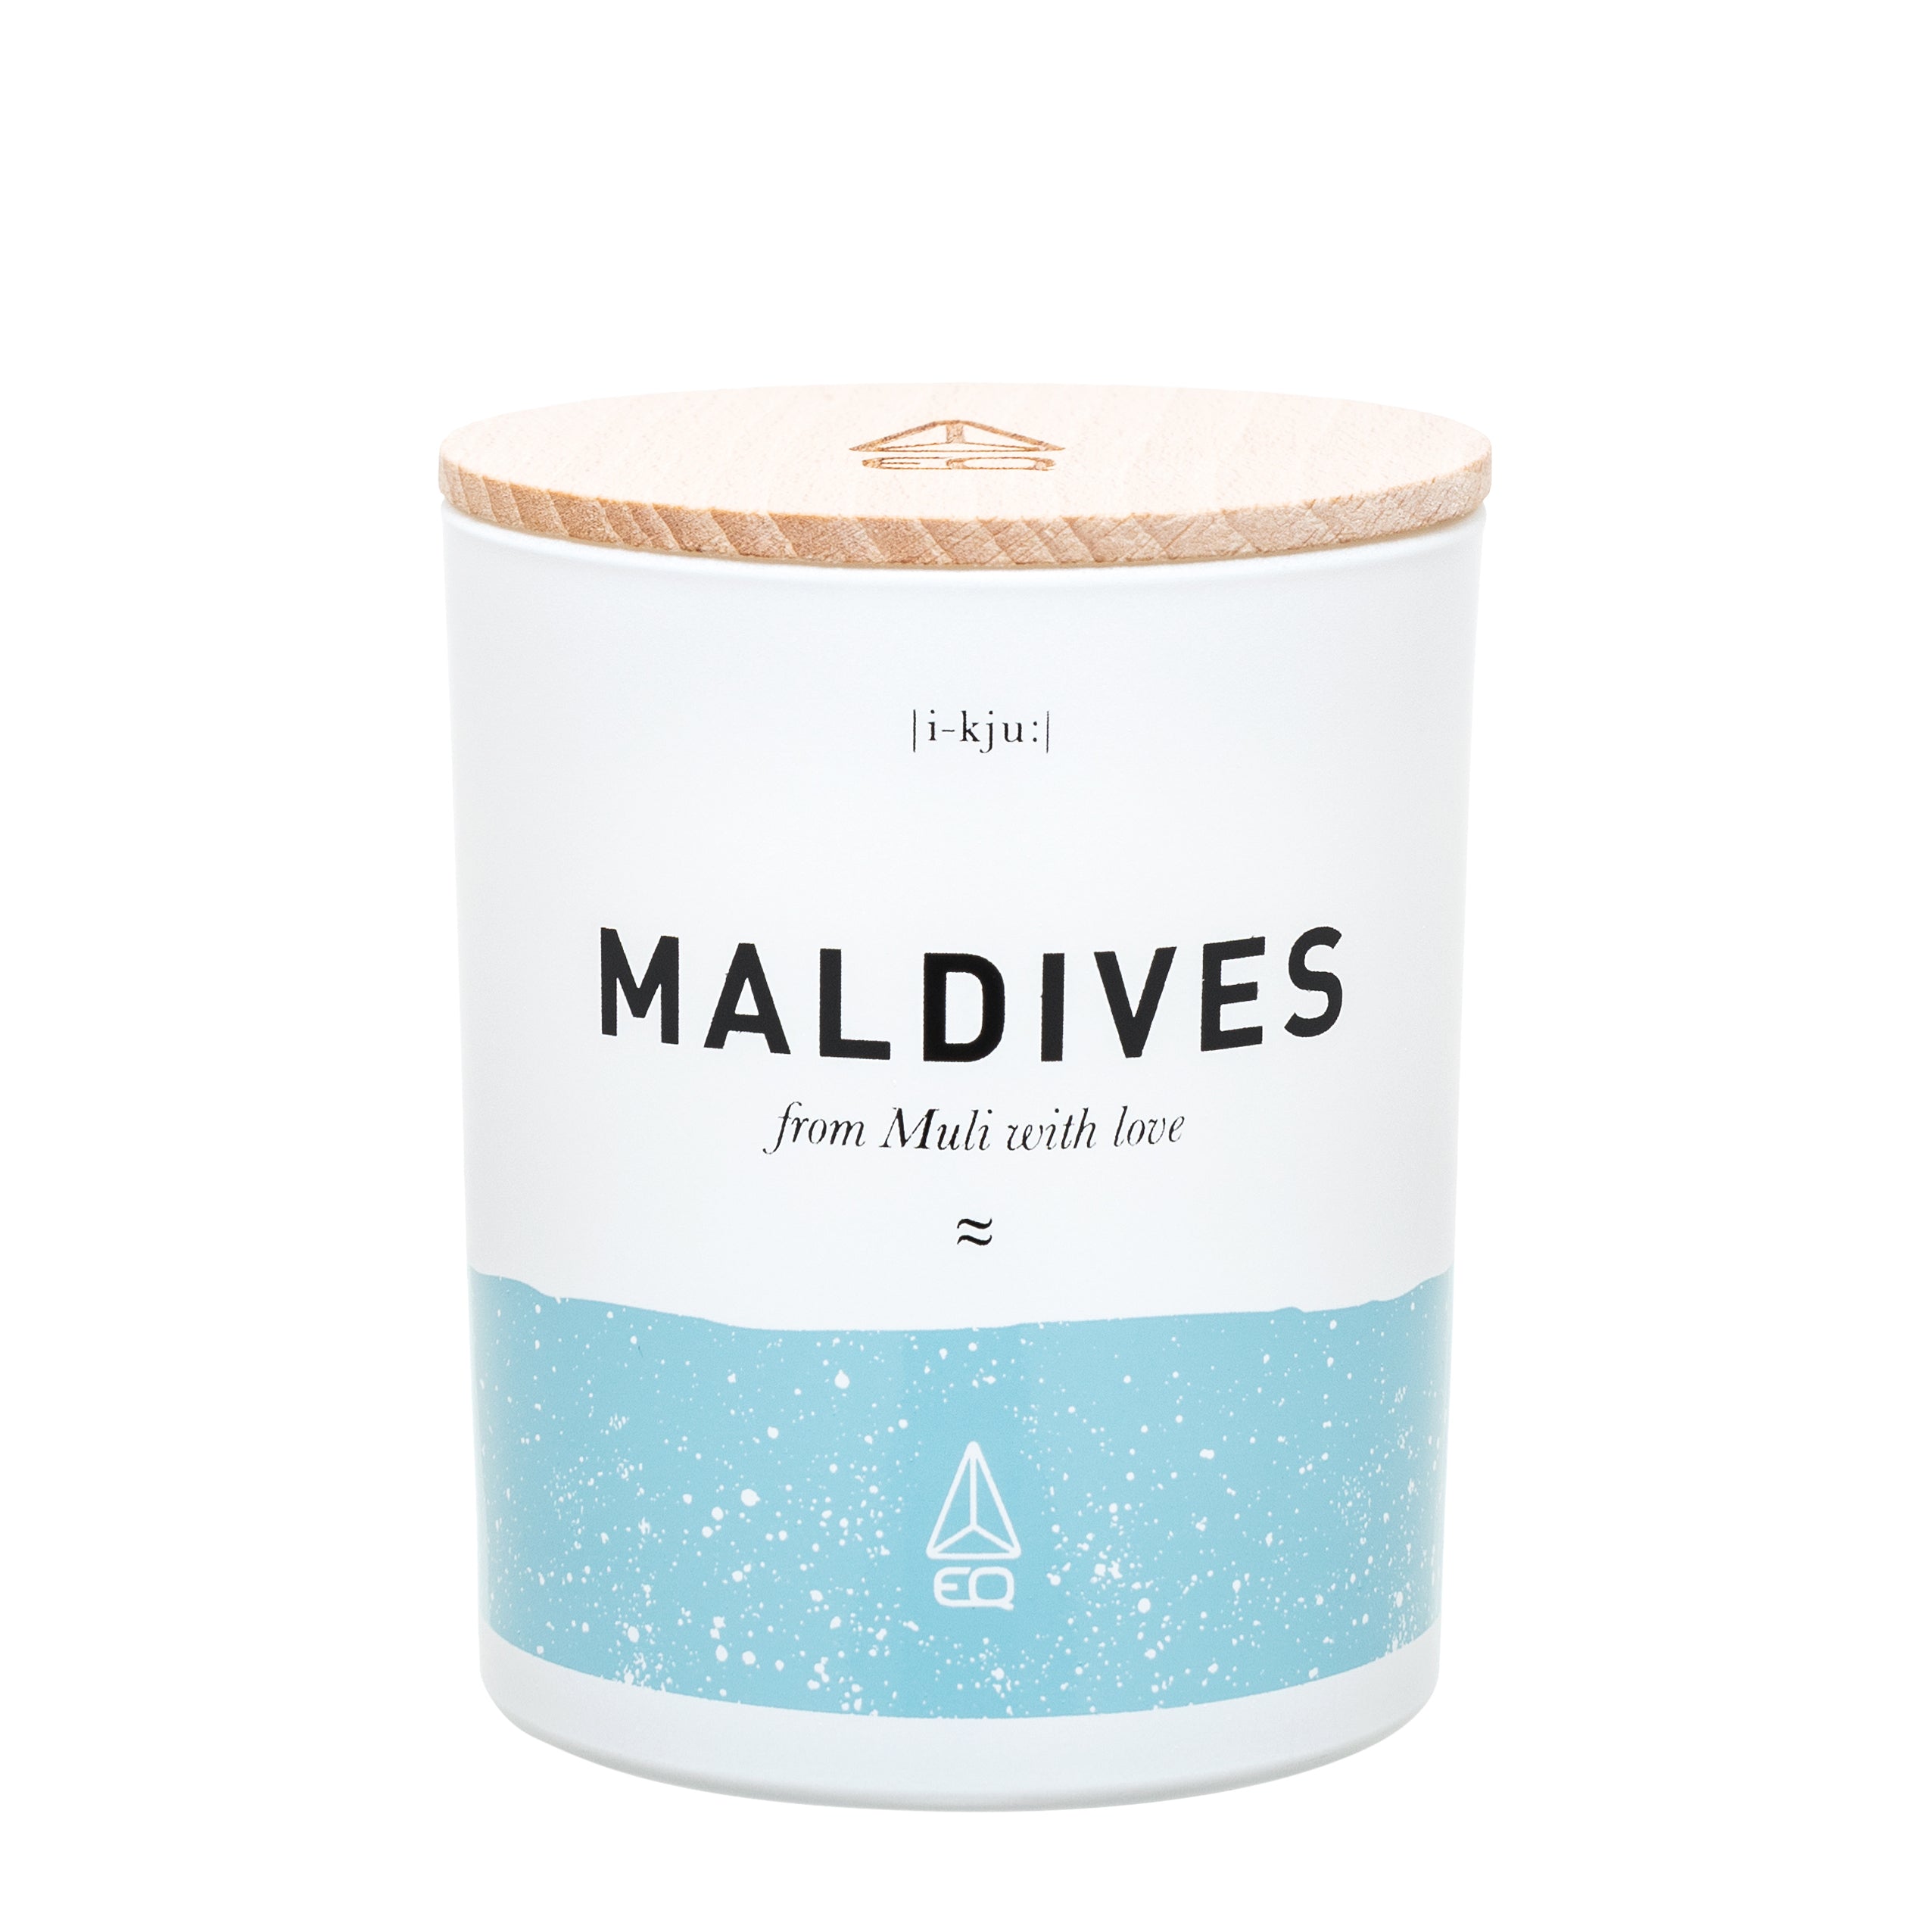 Maldives - Vanilla, Gaïac Wood, White Musk, Ylang Ylang & Tiare Flower.